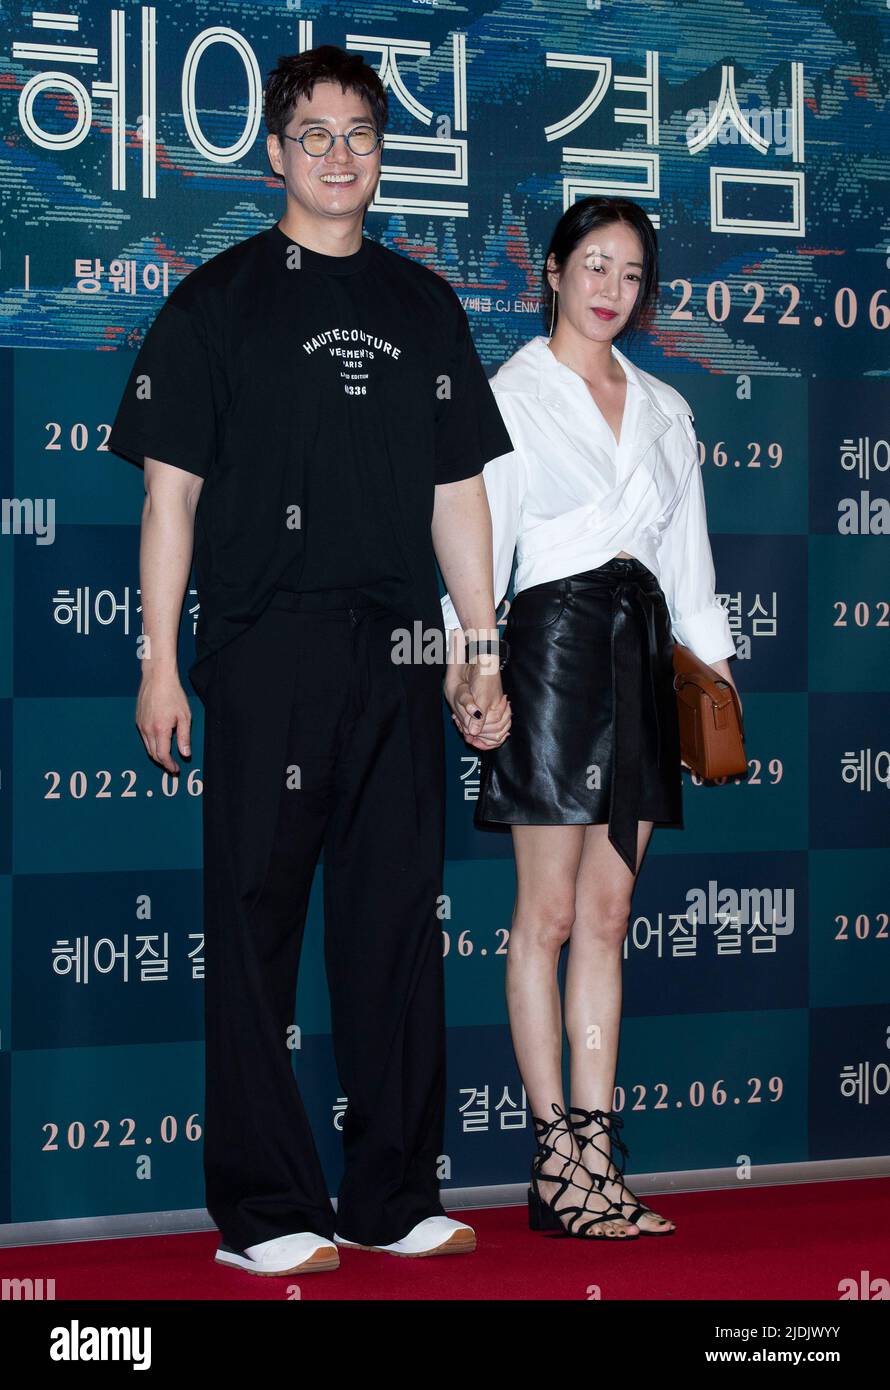 Seoul, South Korea : 21 Jun 2022 - Actors Yoo Ji-tae and Kim Hyo-jin, pose  for photos during a VIP premiere to promote the film 